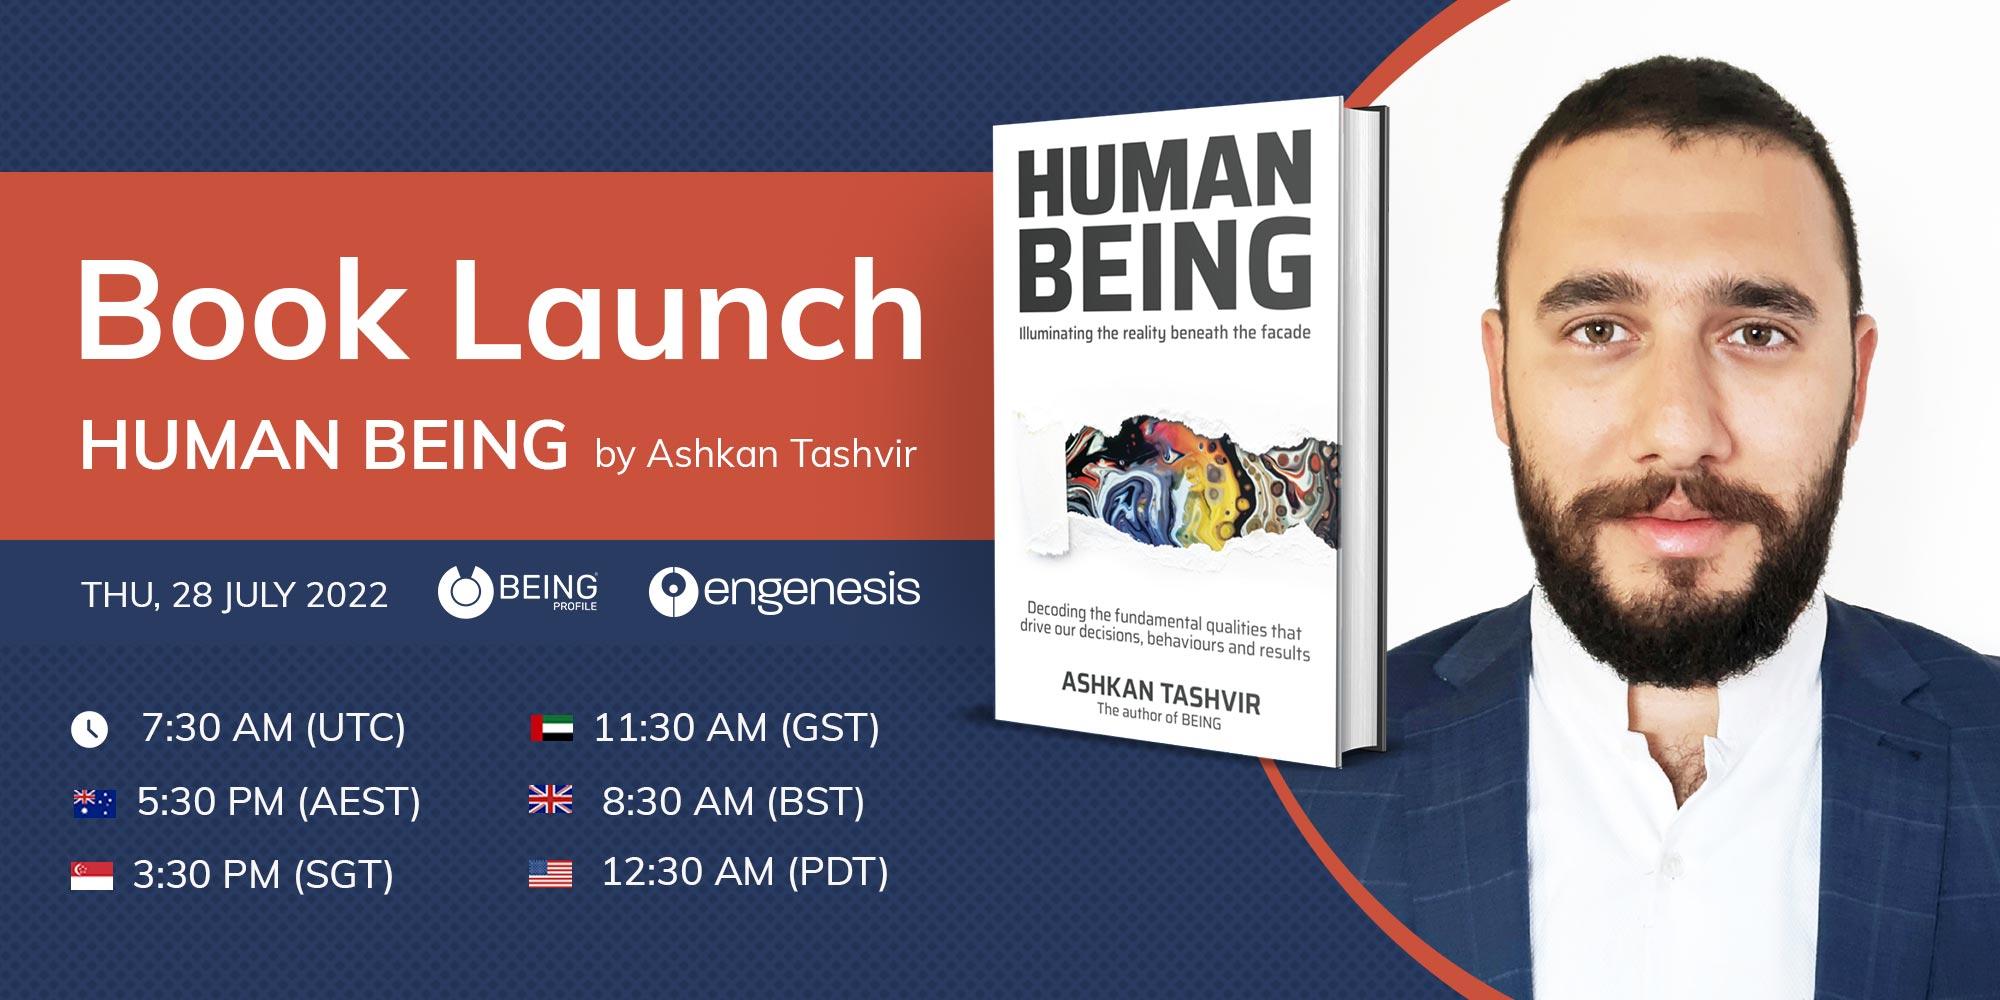 Human Being by Ashkan Tashvir - Book Launch Event